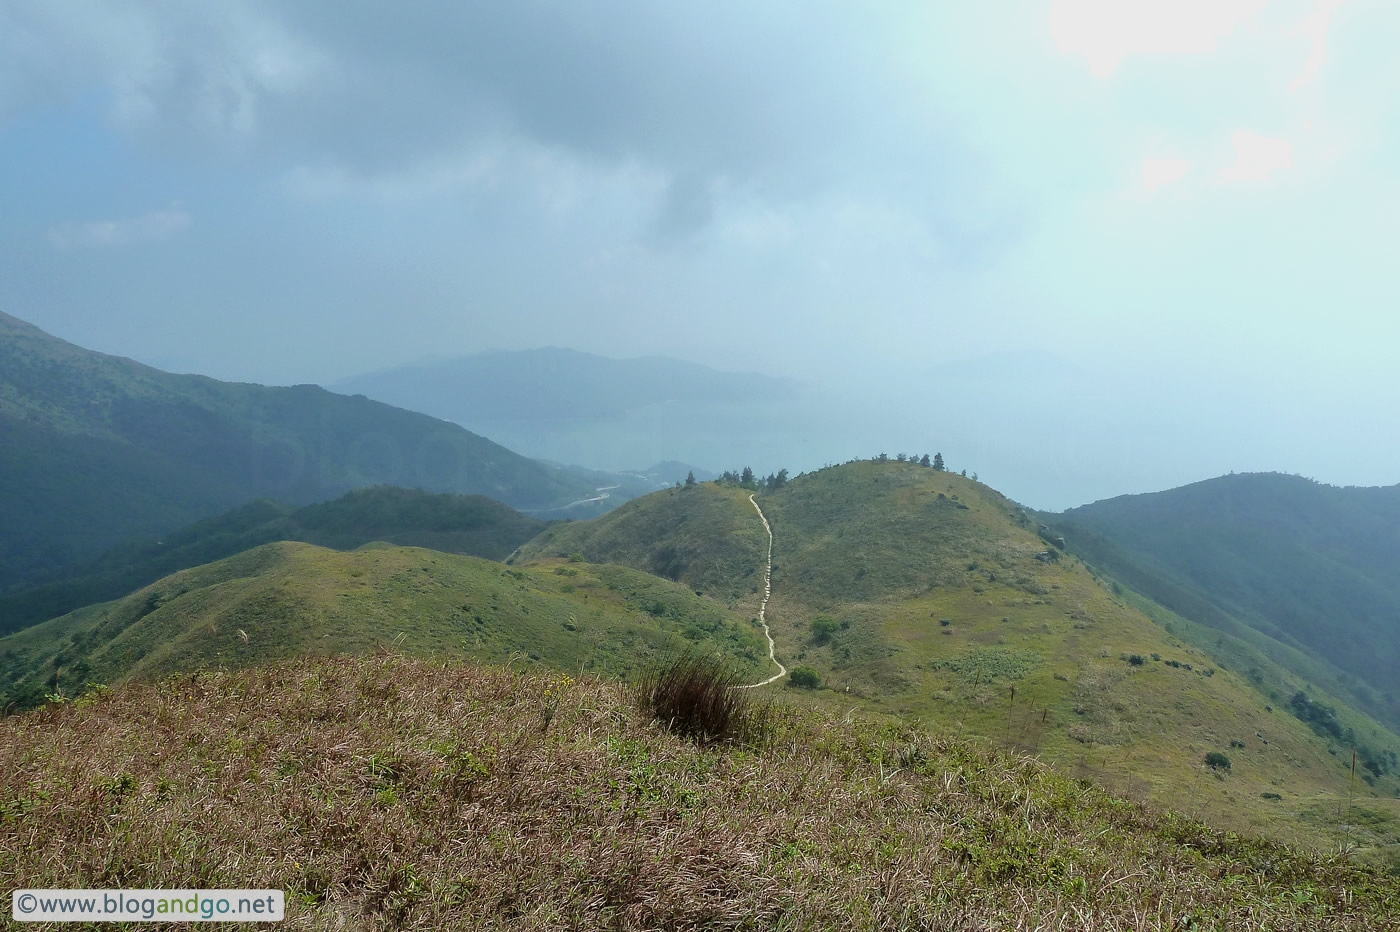 Lantau Trail - A motivating look back